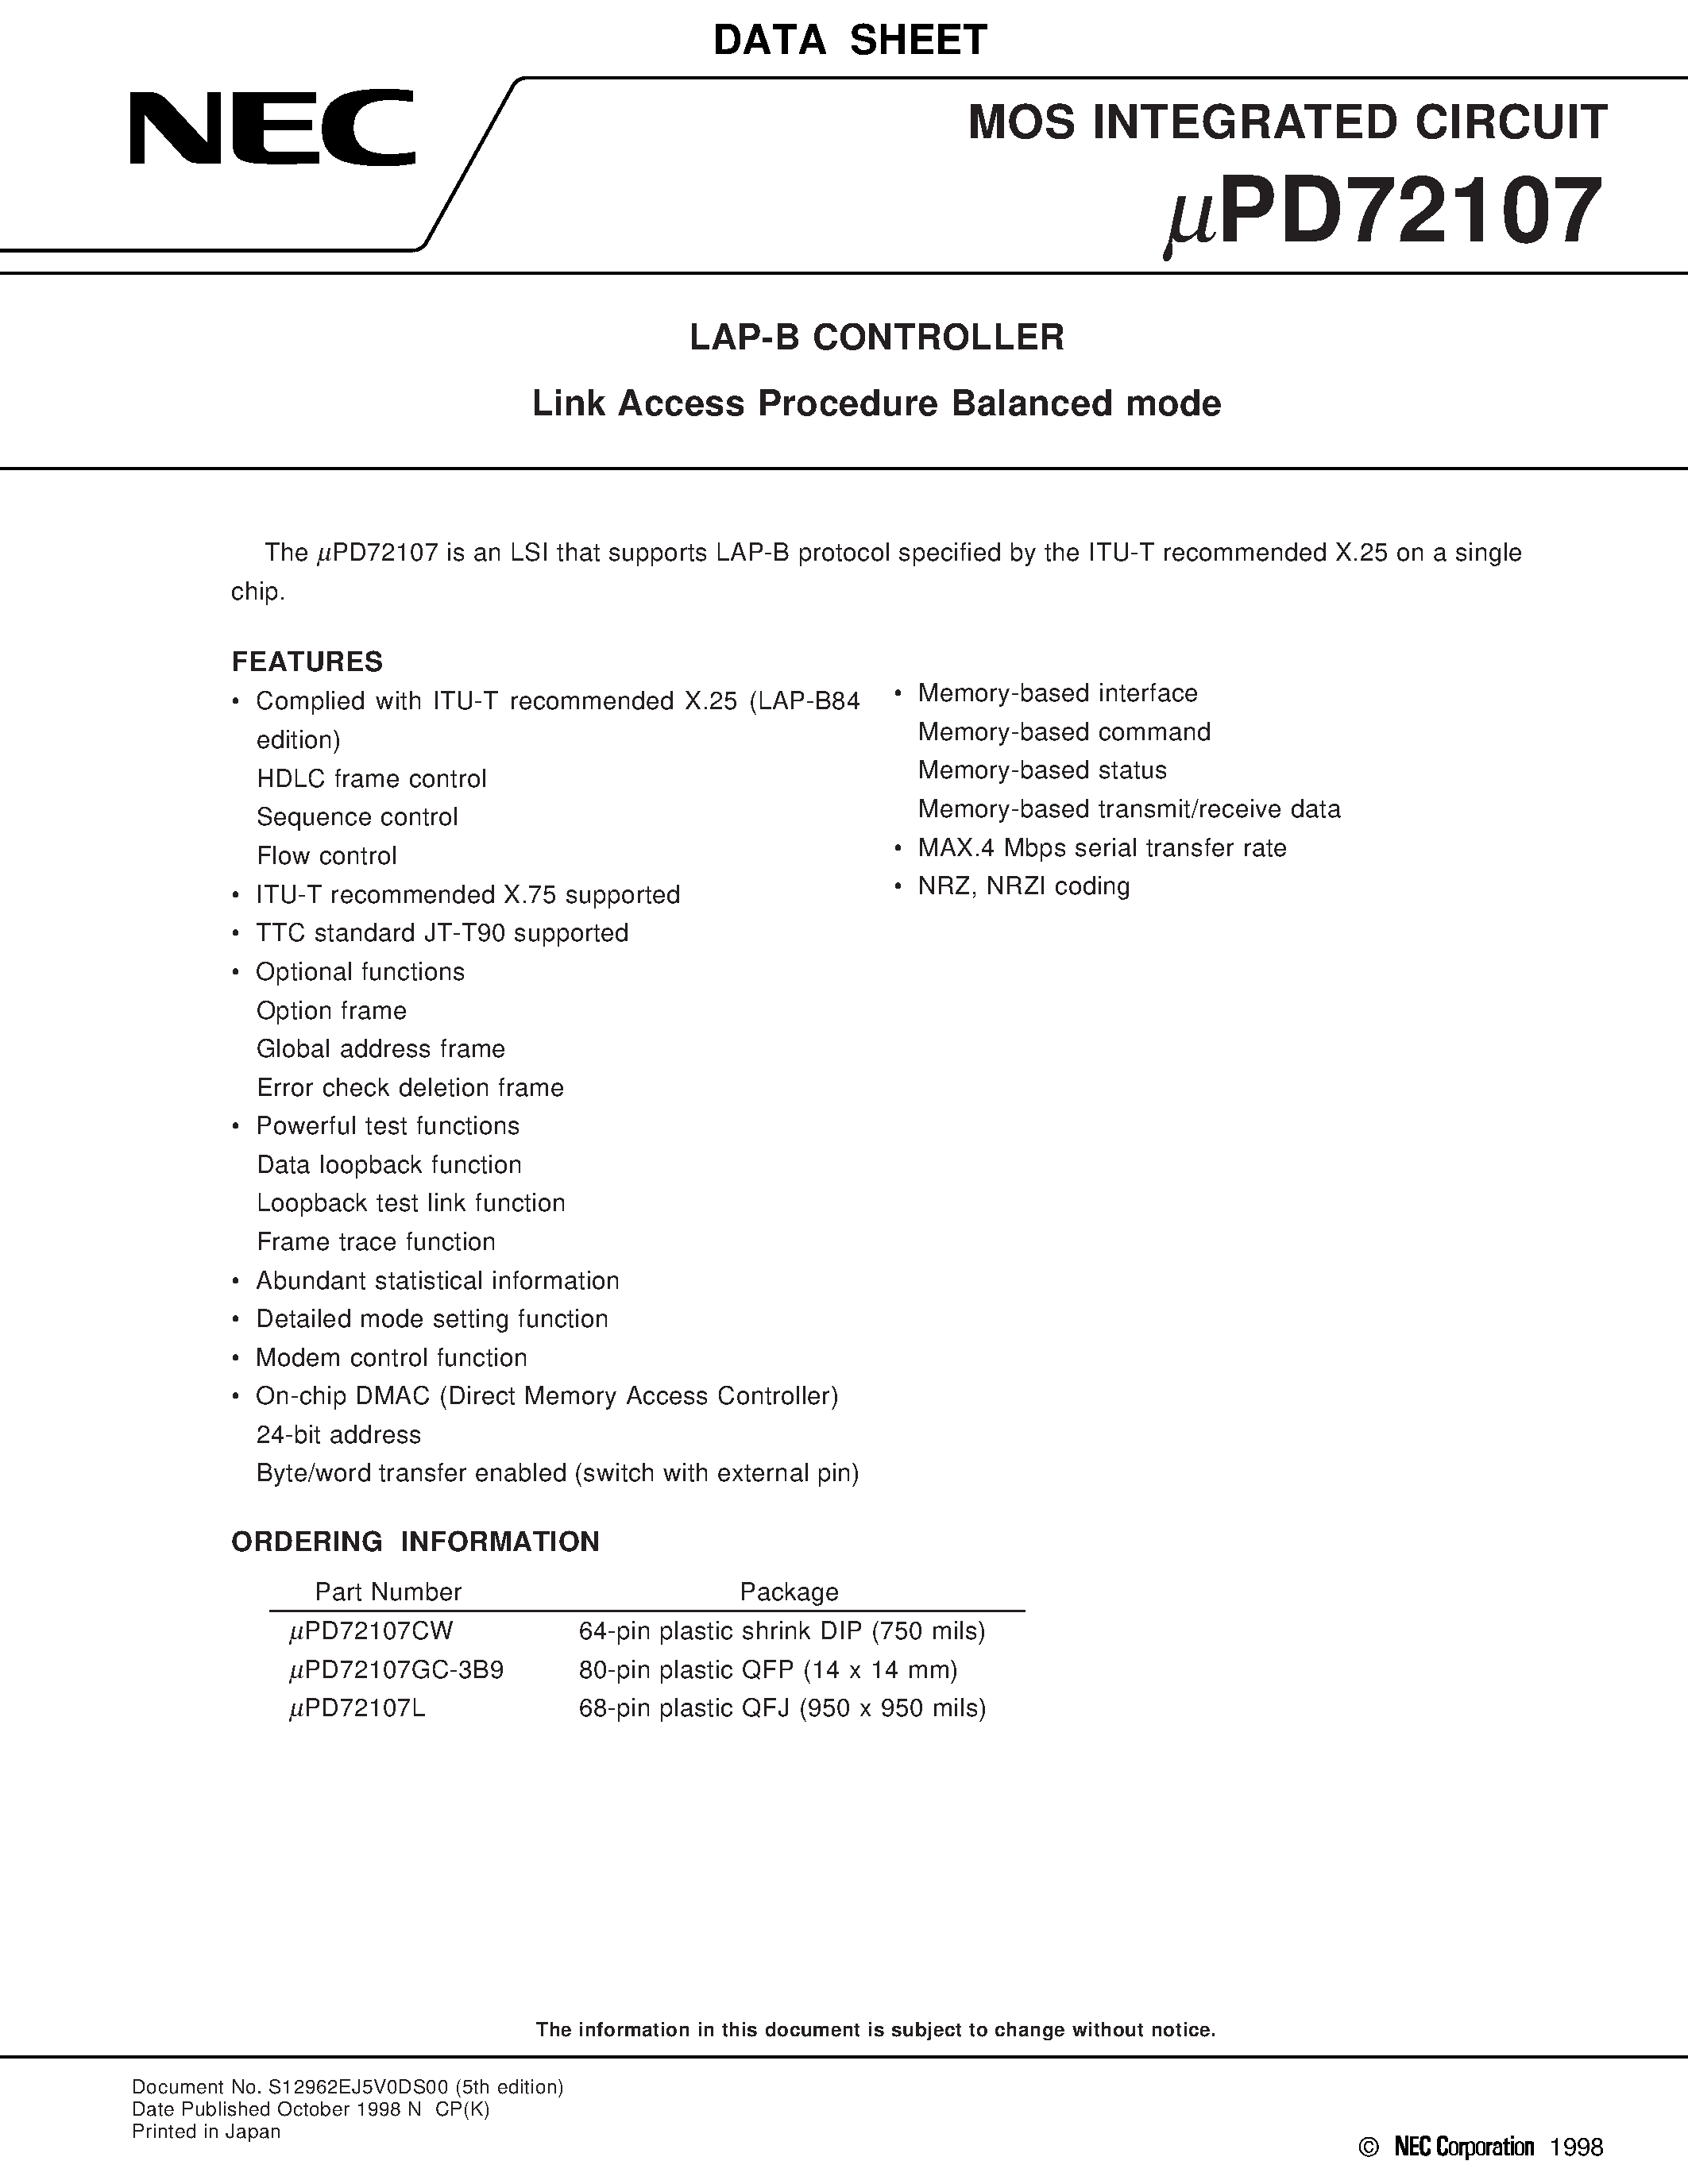 Даташит uPD72107L - LAP-B CONTROLLER(Link Access Procedure Balanced mode) страница 1